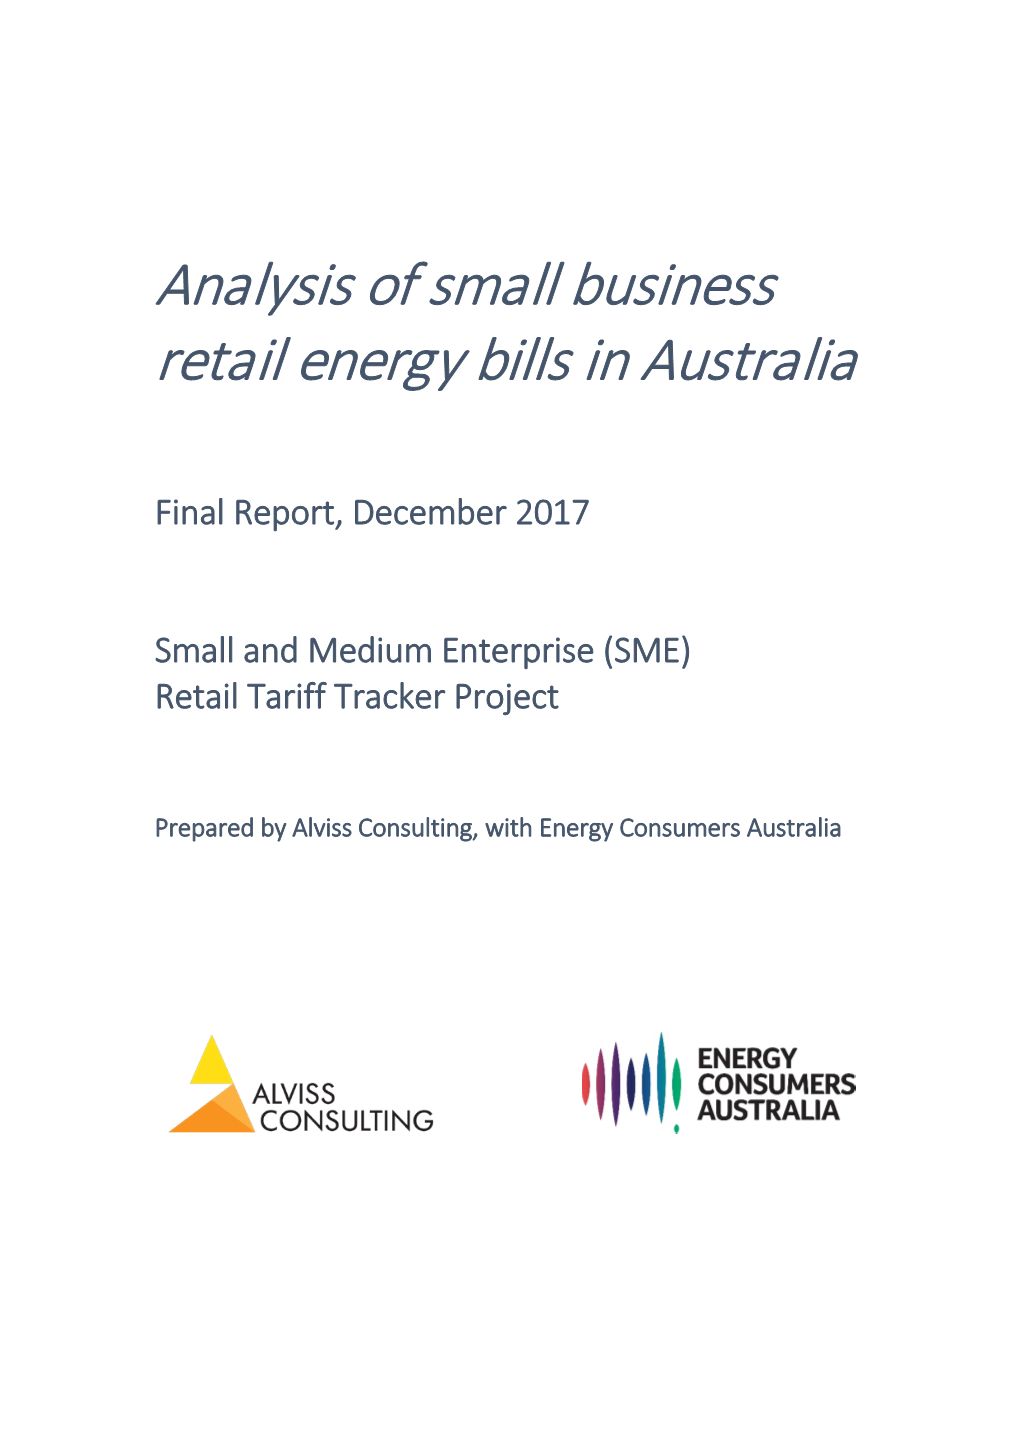 Analysis of Small Business Retail Energy Bills in Australia